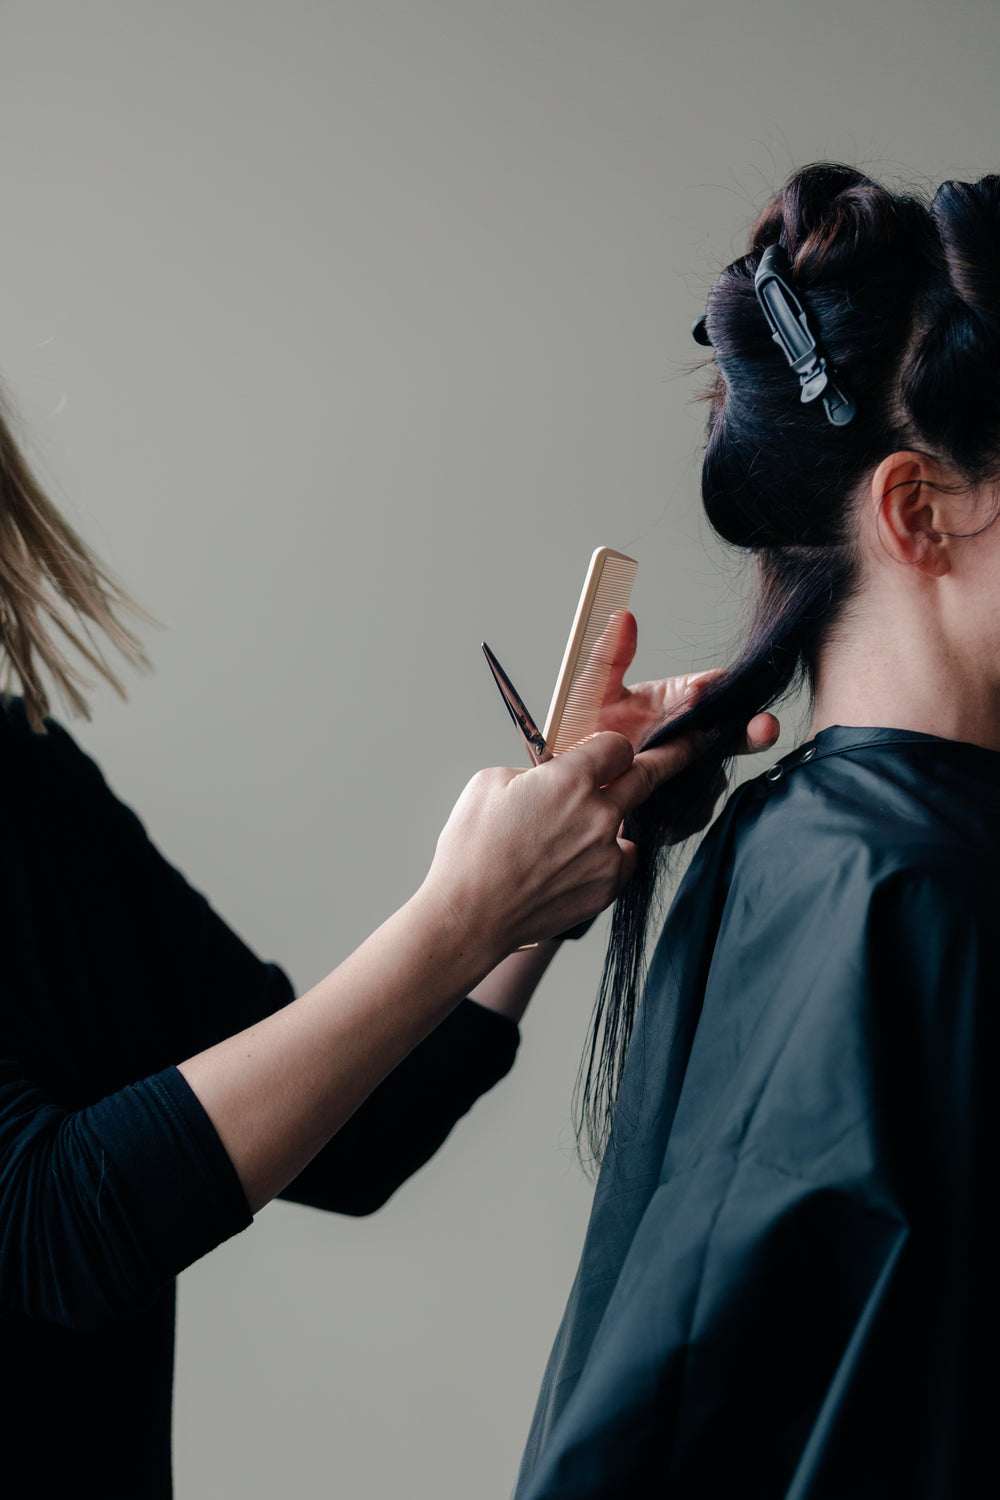 stylist cuts a woman's hair